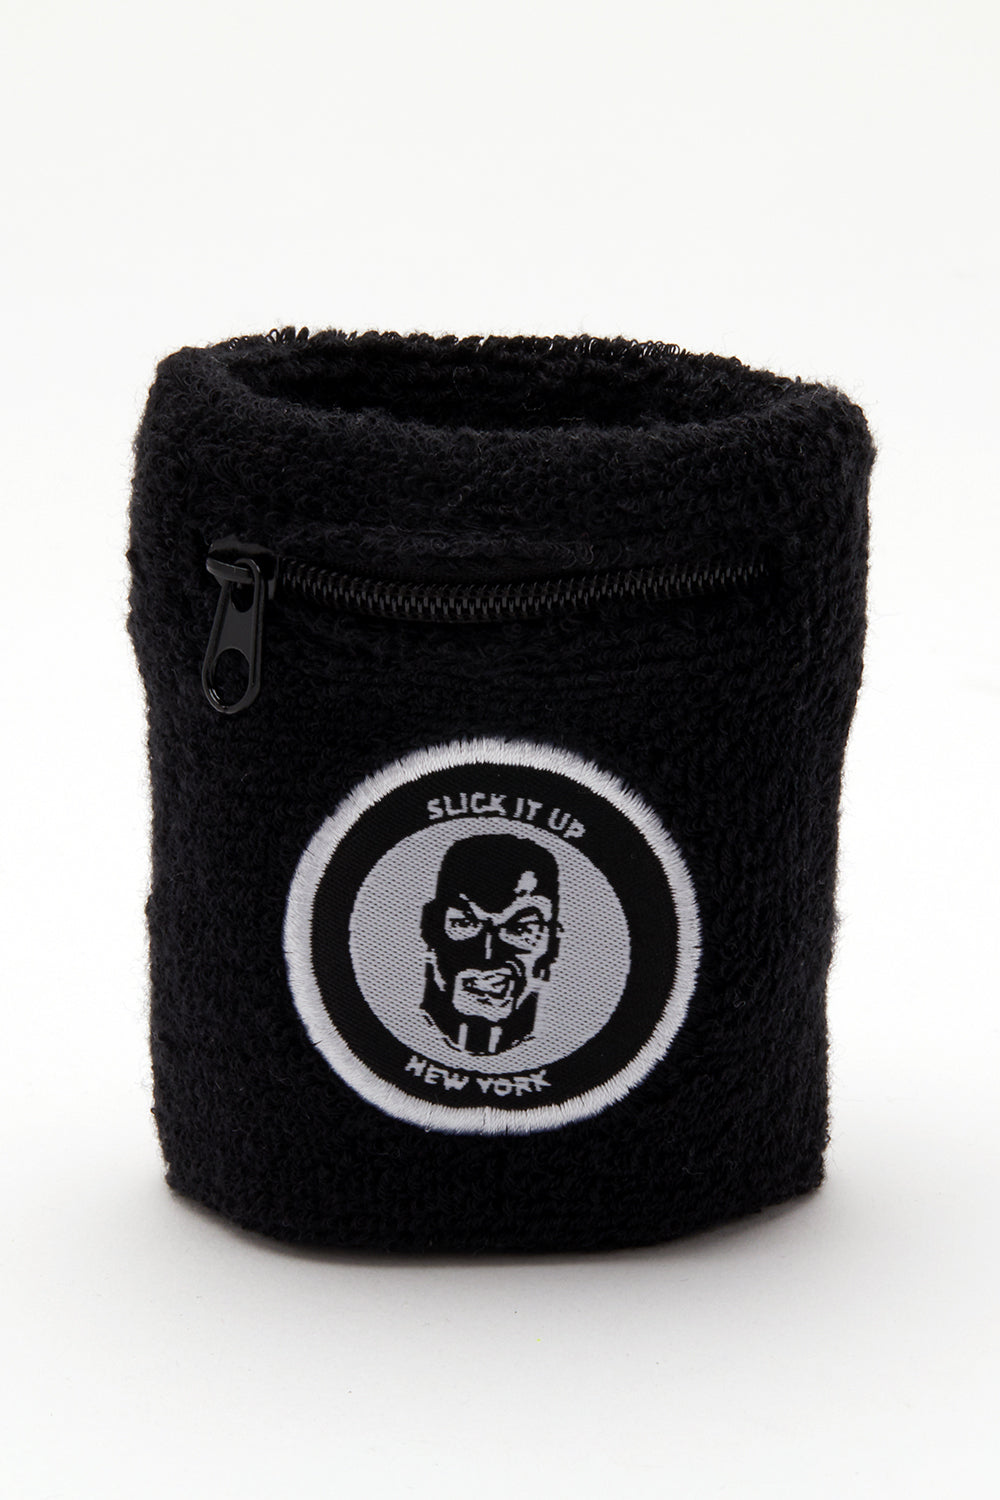 Black Hidden Zipper Pocket Sweatbands PAIR - Slick It Up 